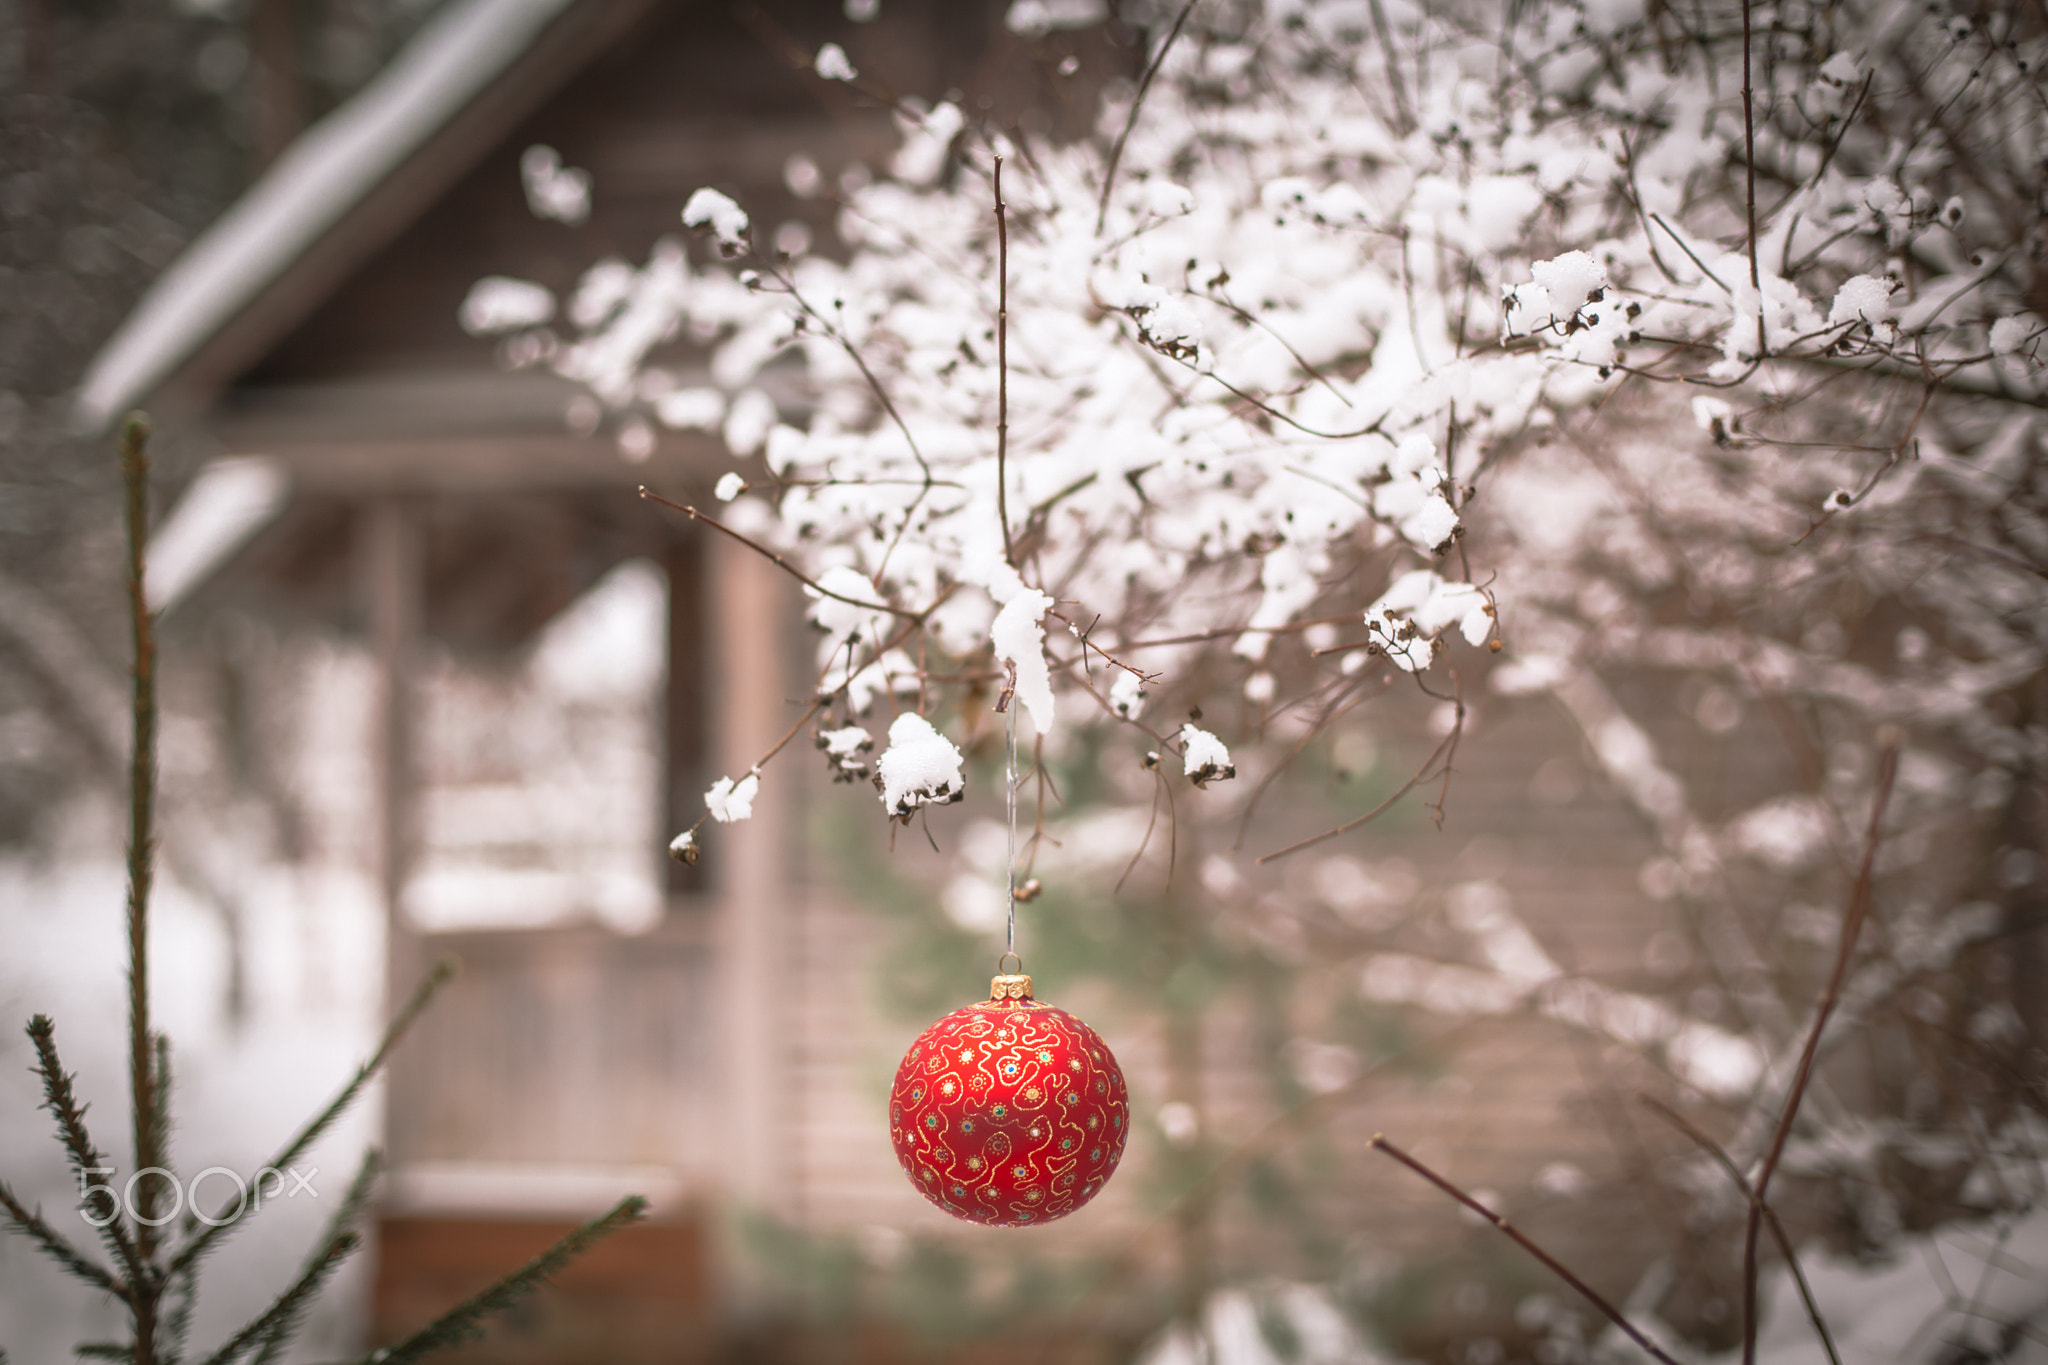 Christmas ball on a tree branch